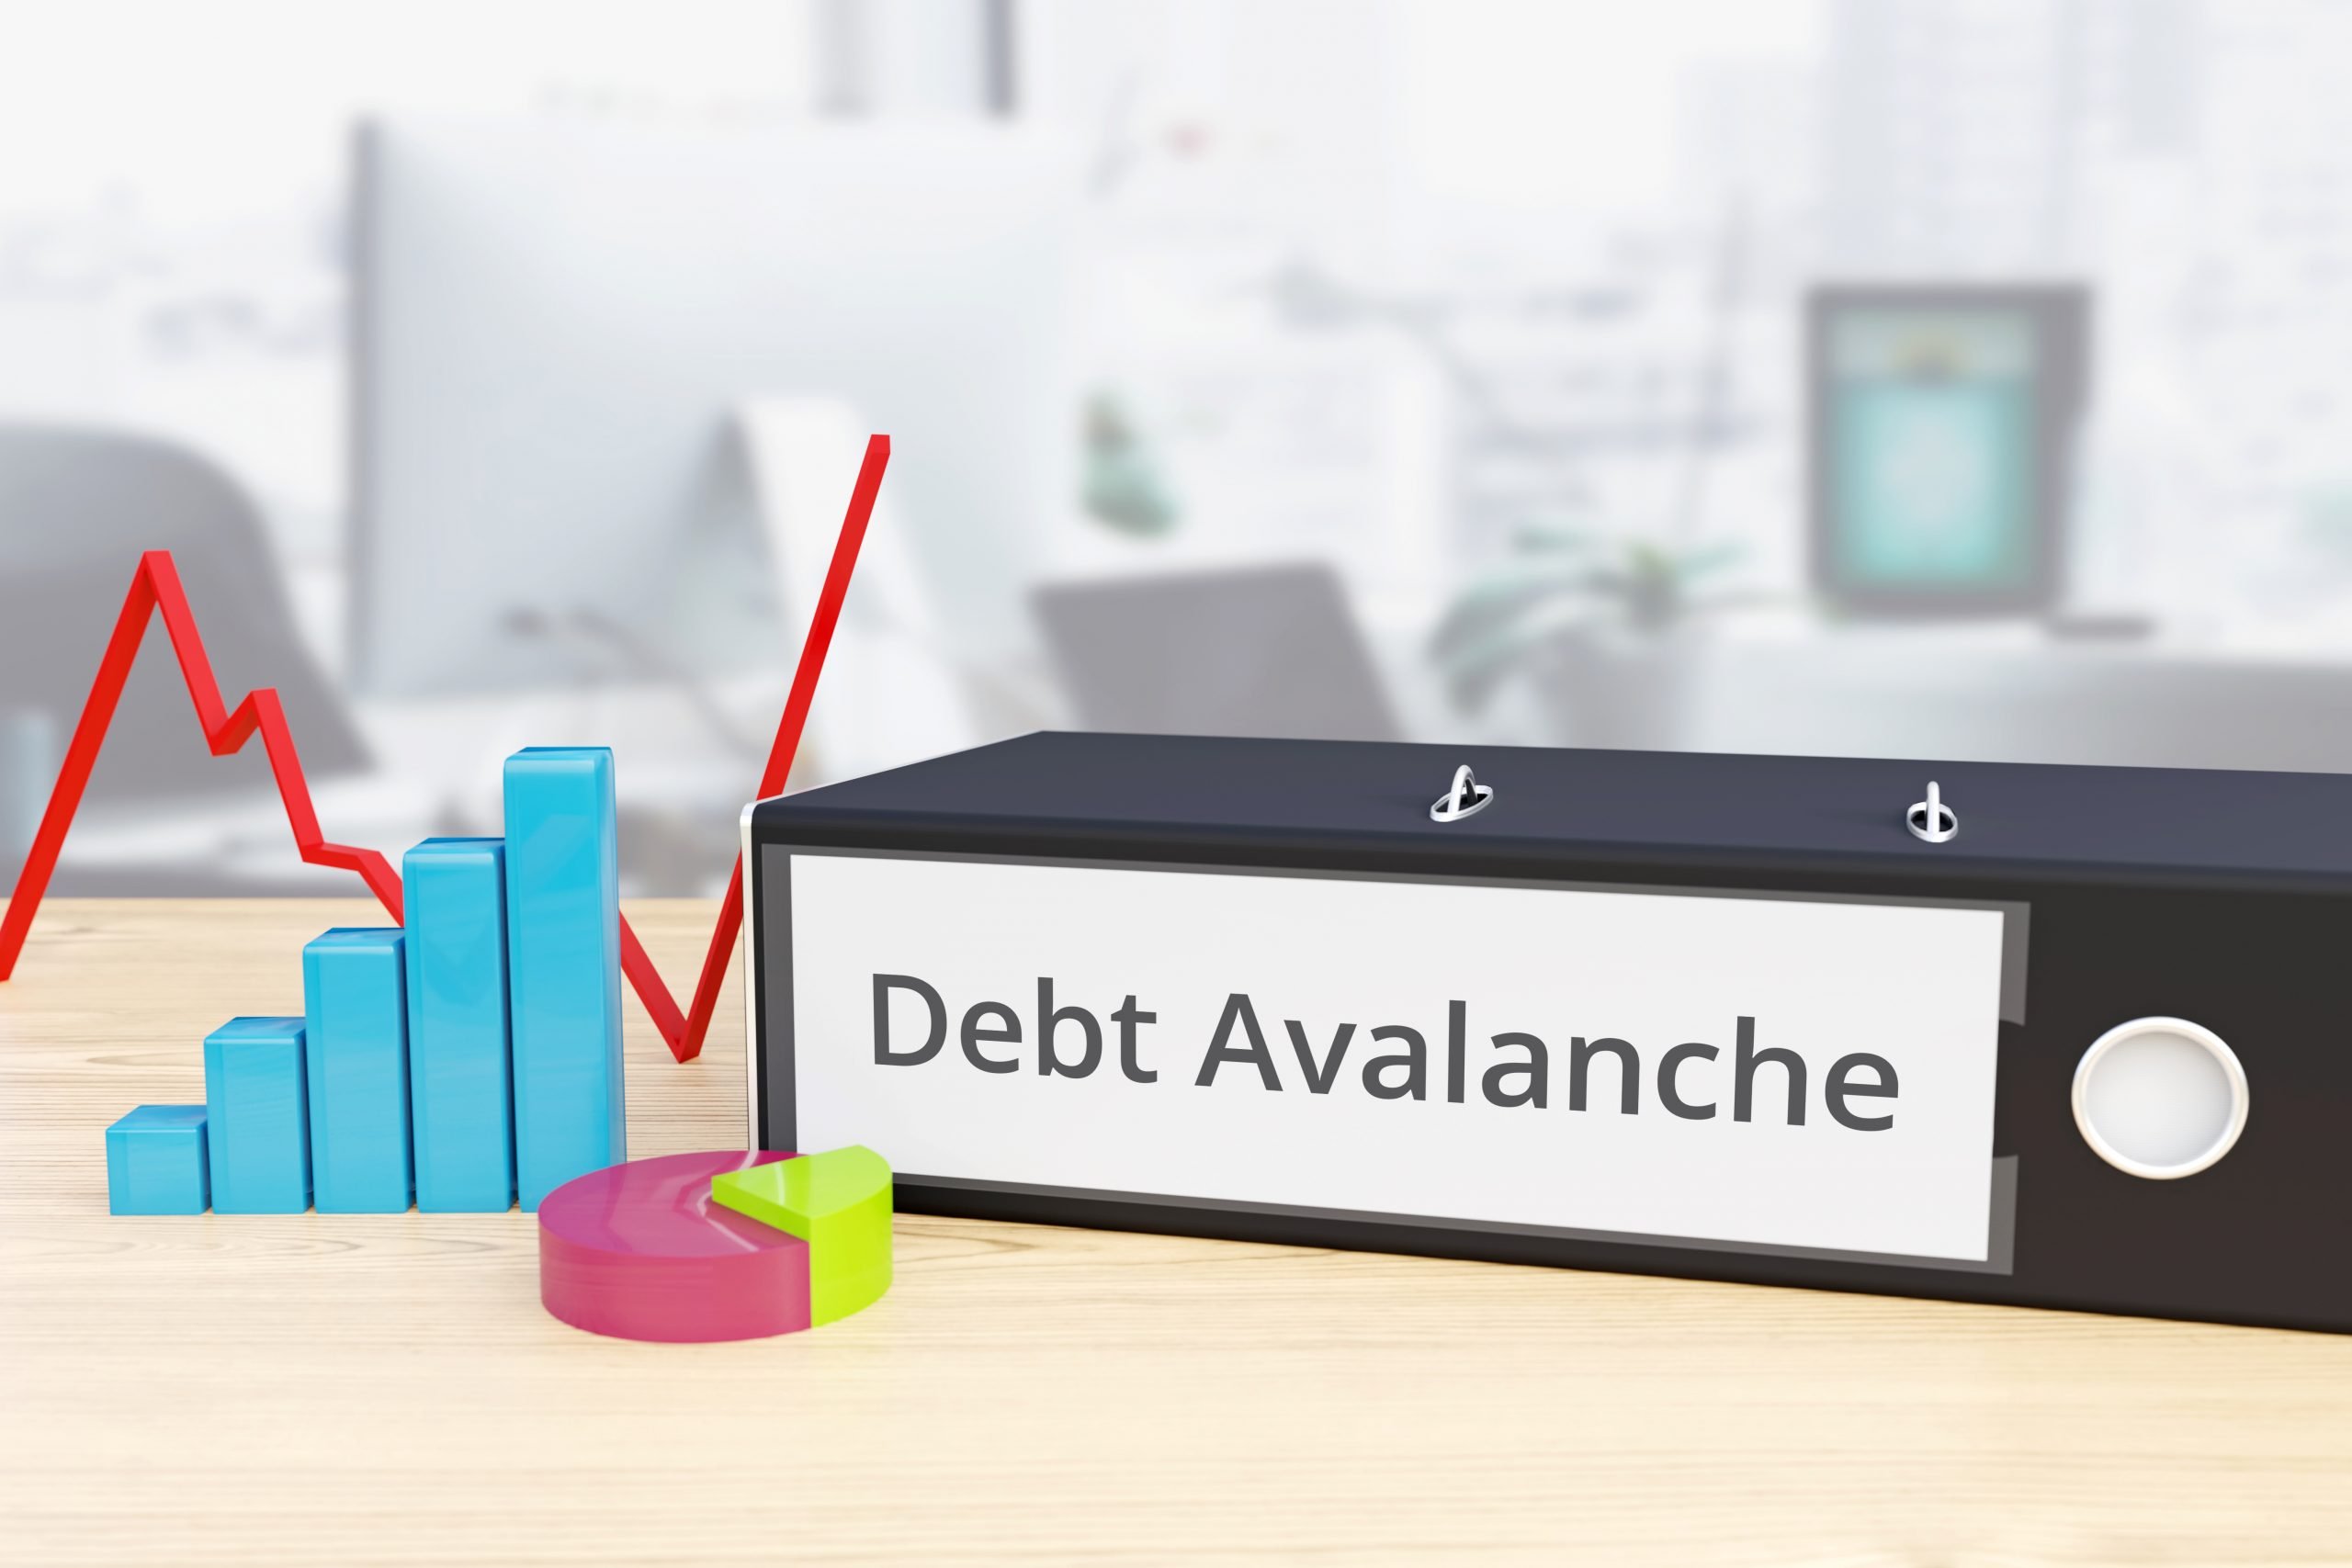 Debt Avalanche - Finance/Economy. Folder on desk with label besi